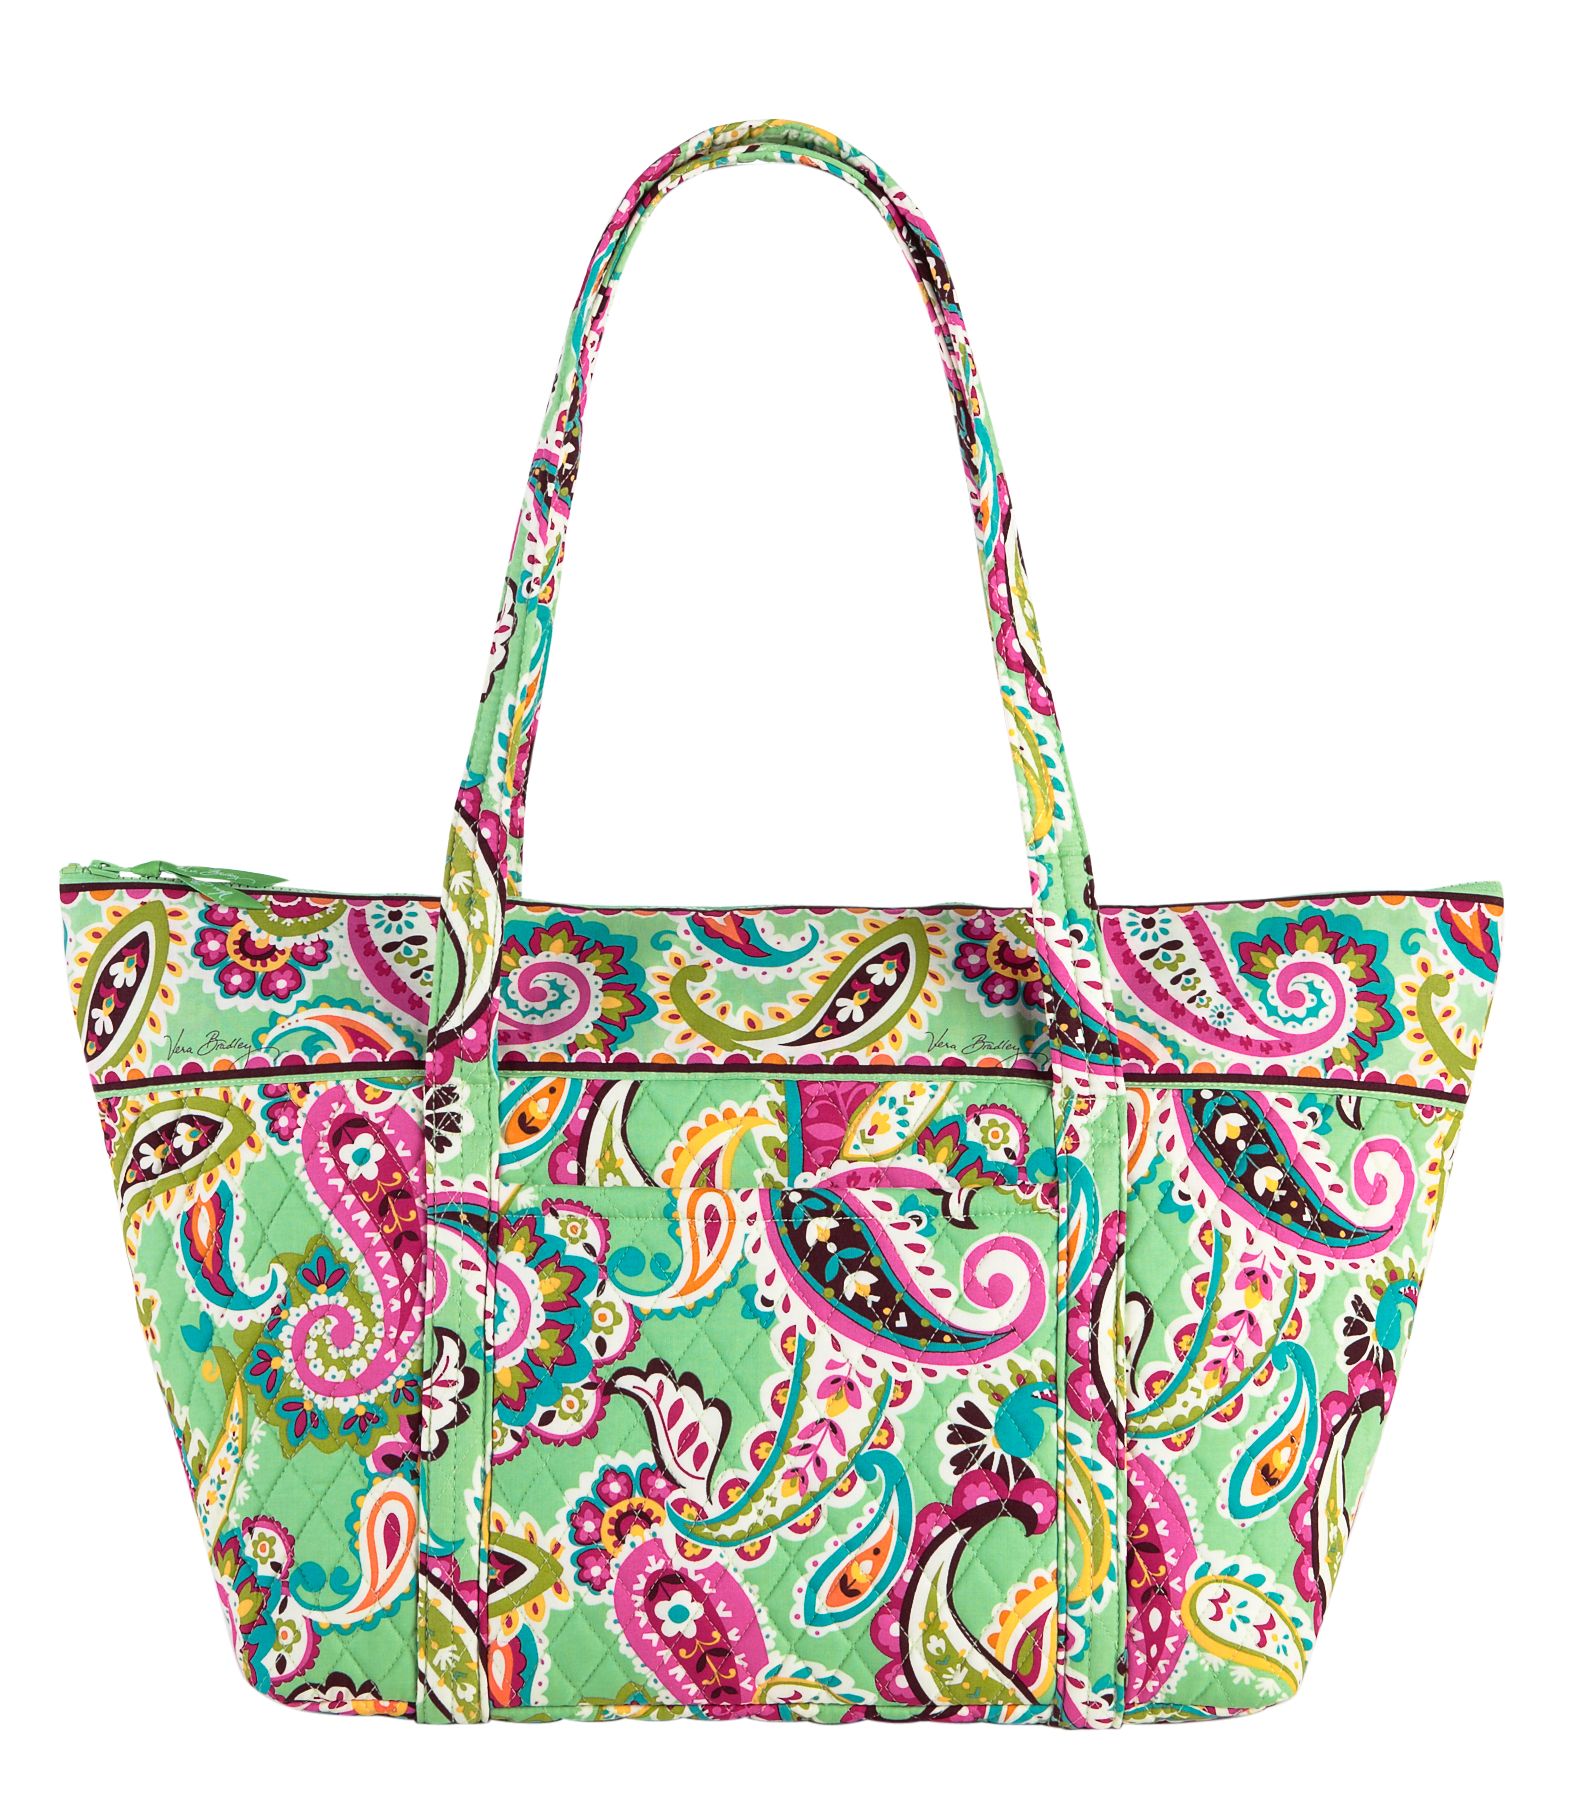 Vera Bradley Miller Bag Travel Bag | eBay